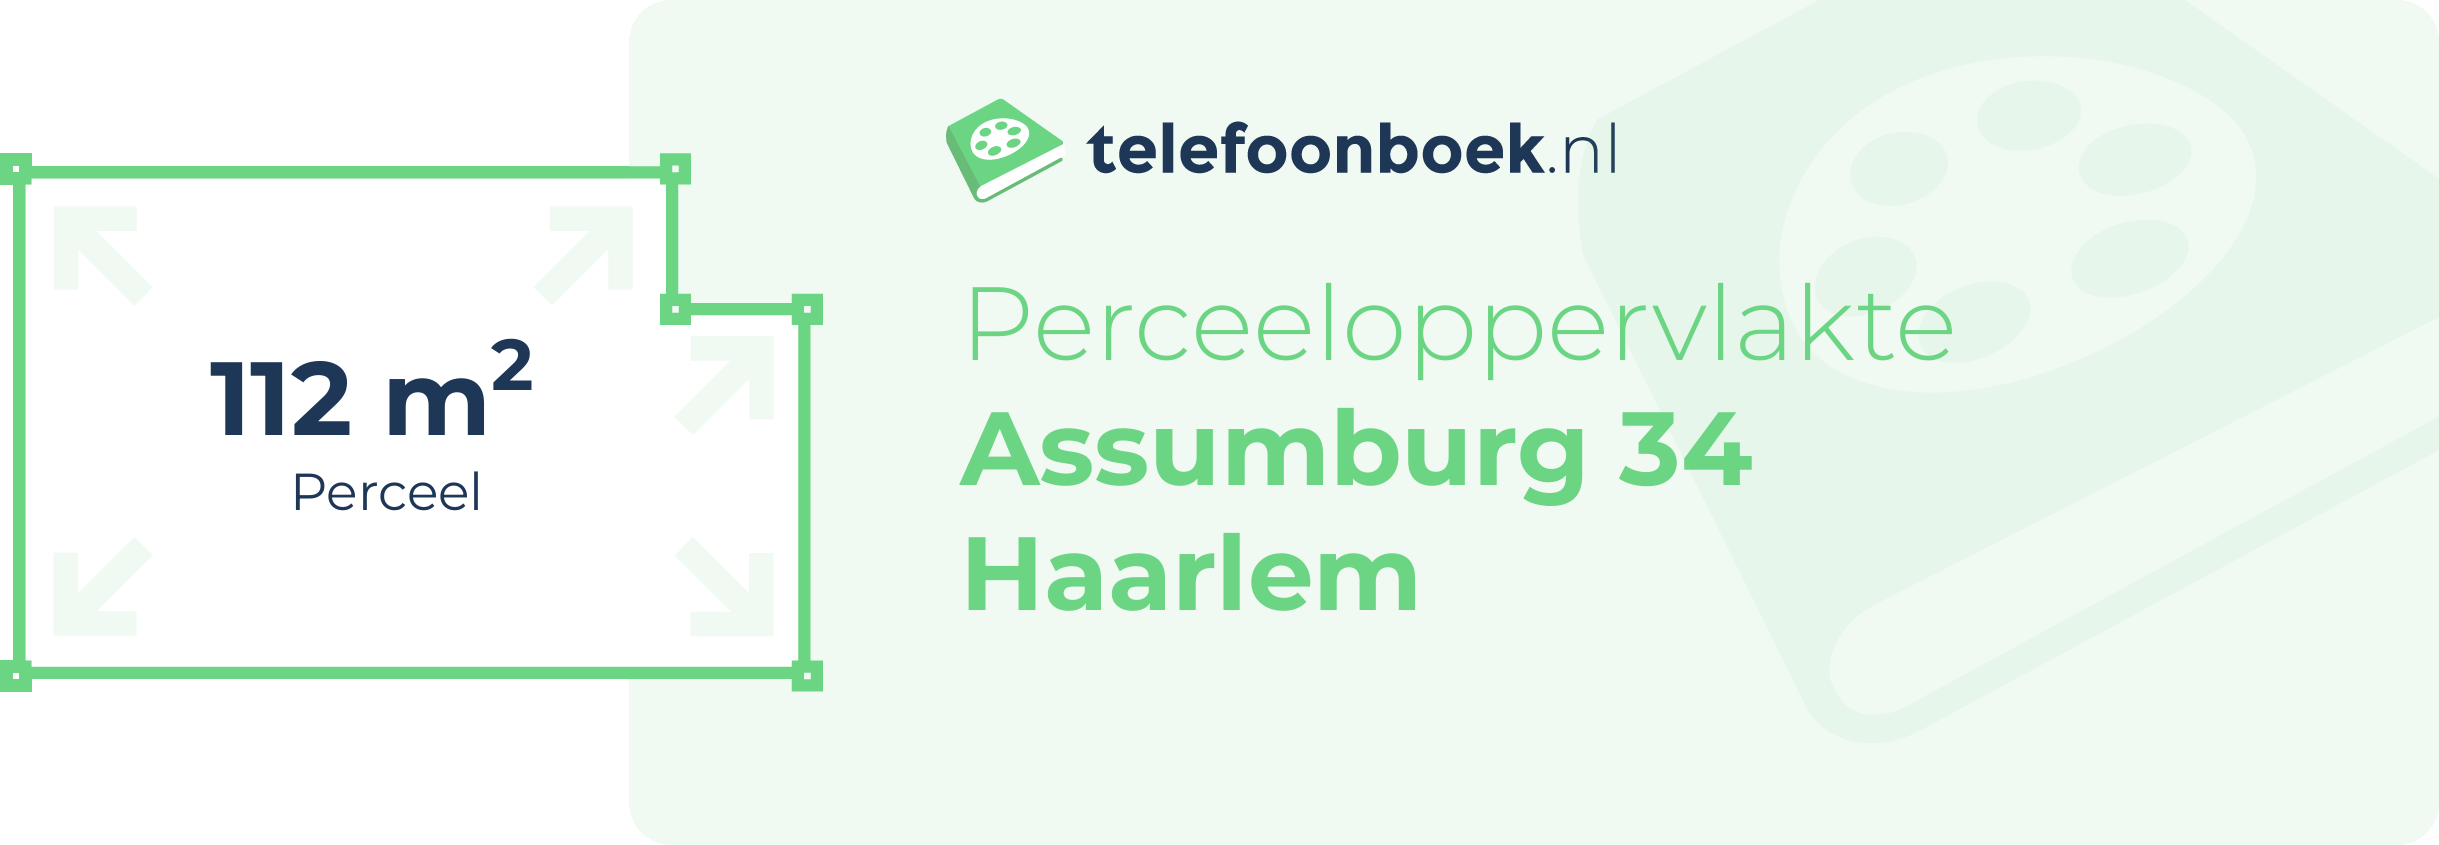 Perceeloppervlakte Assumburg 34 Haarlem